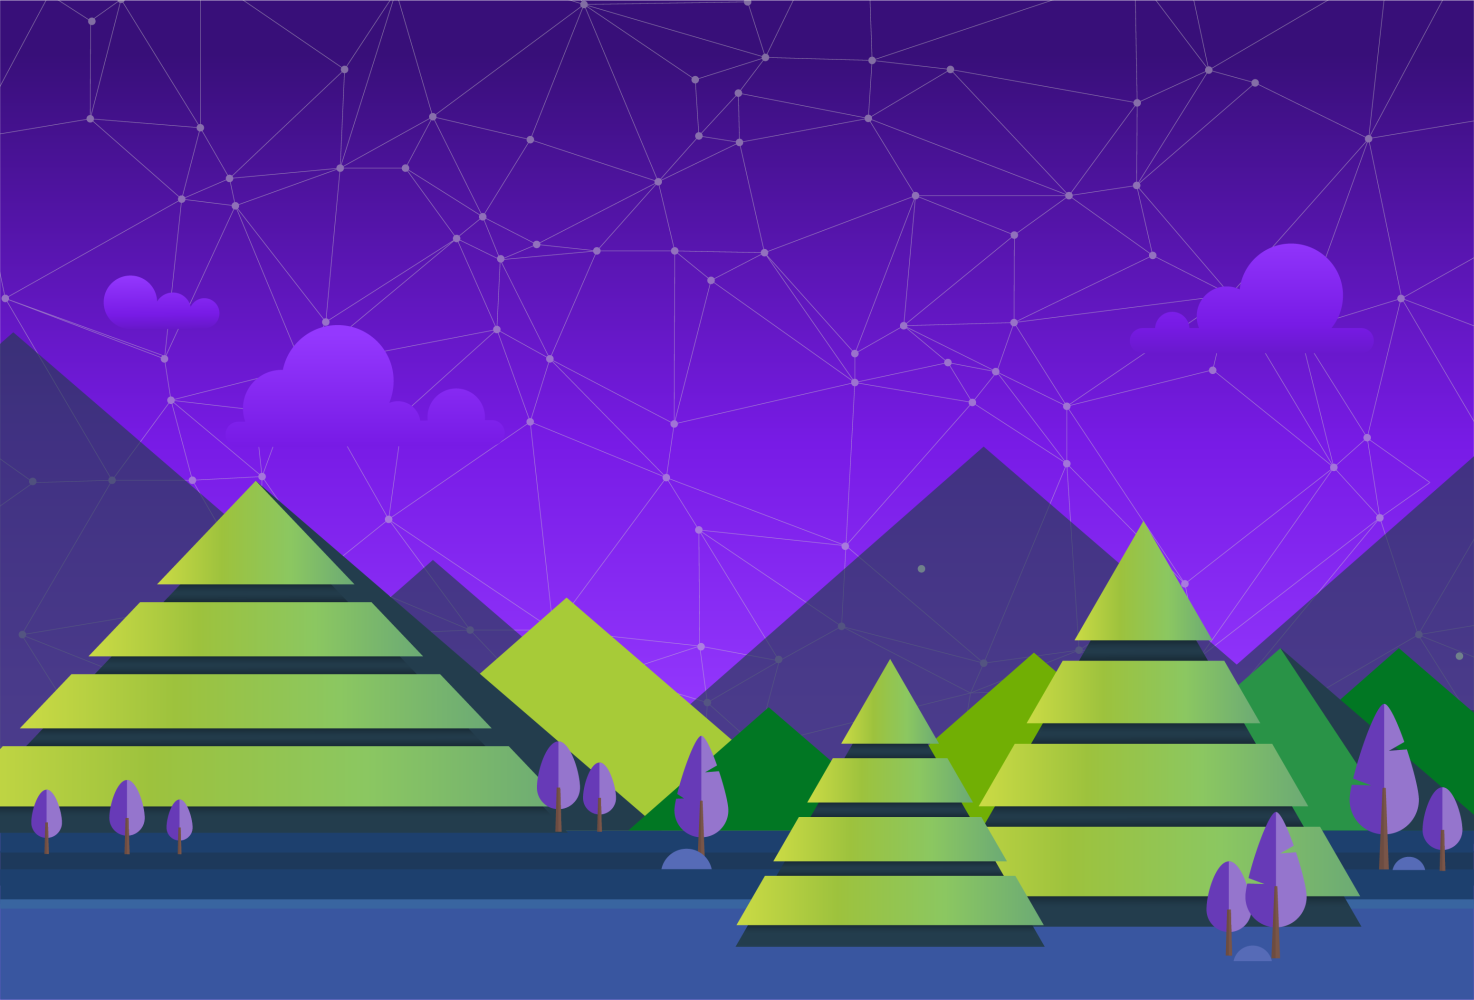 several green and purple pyramids